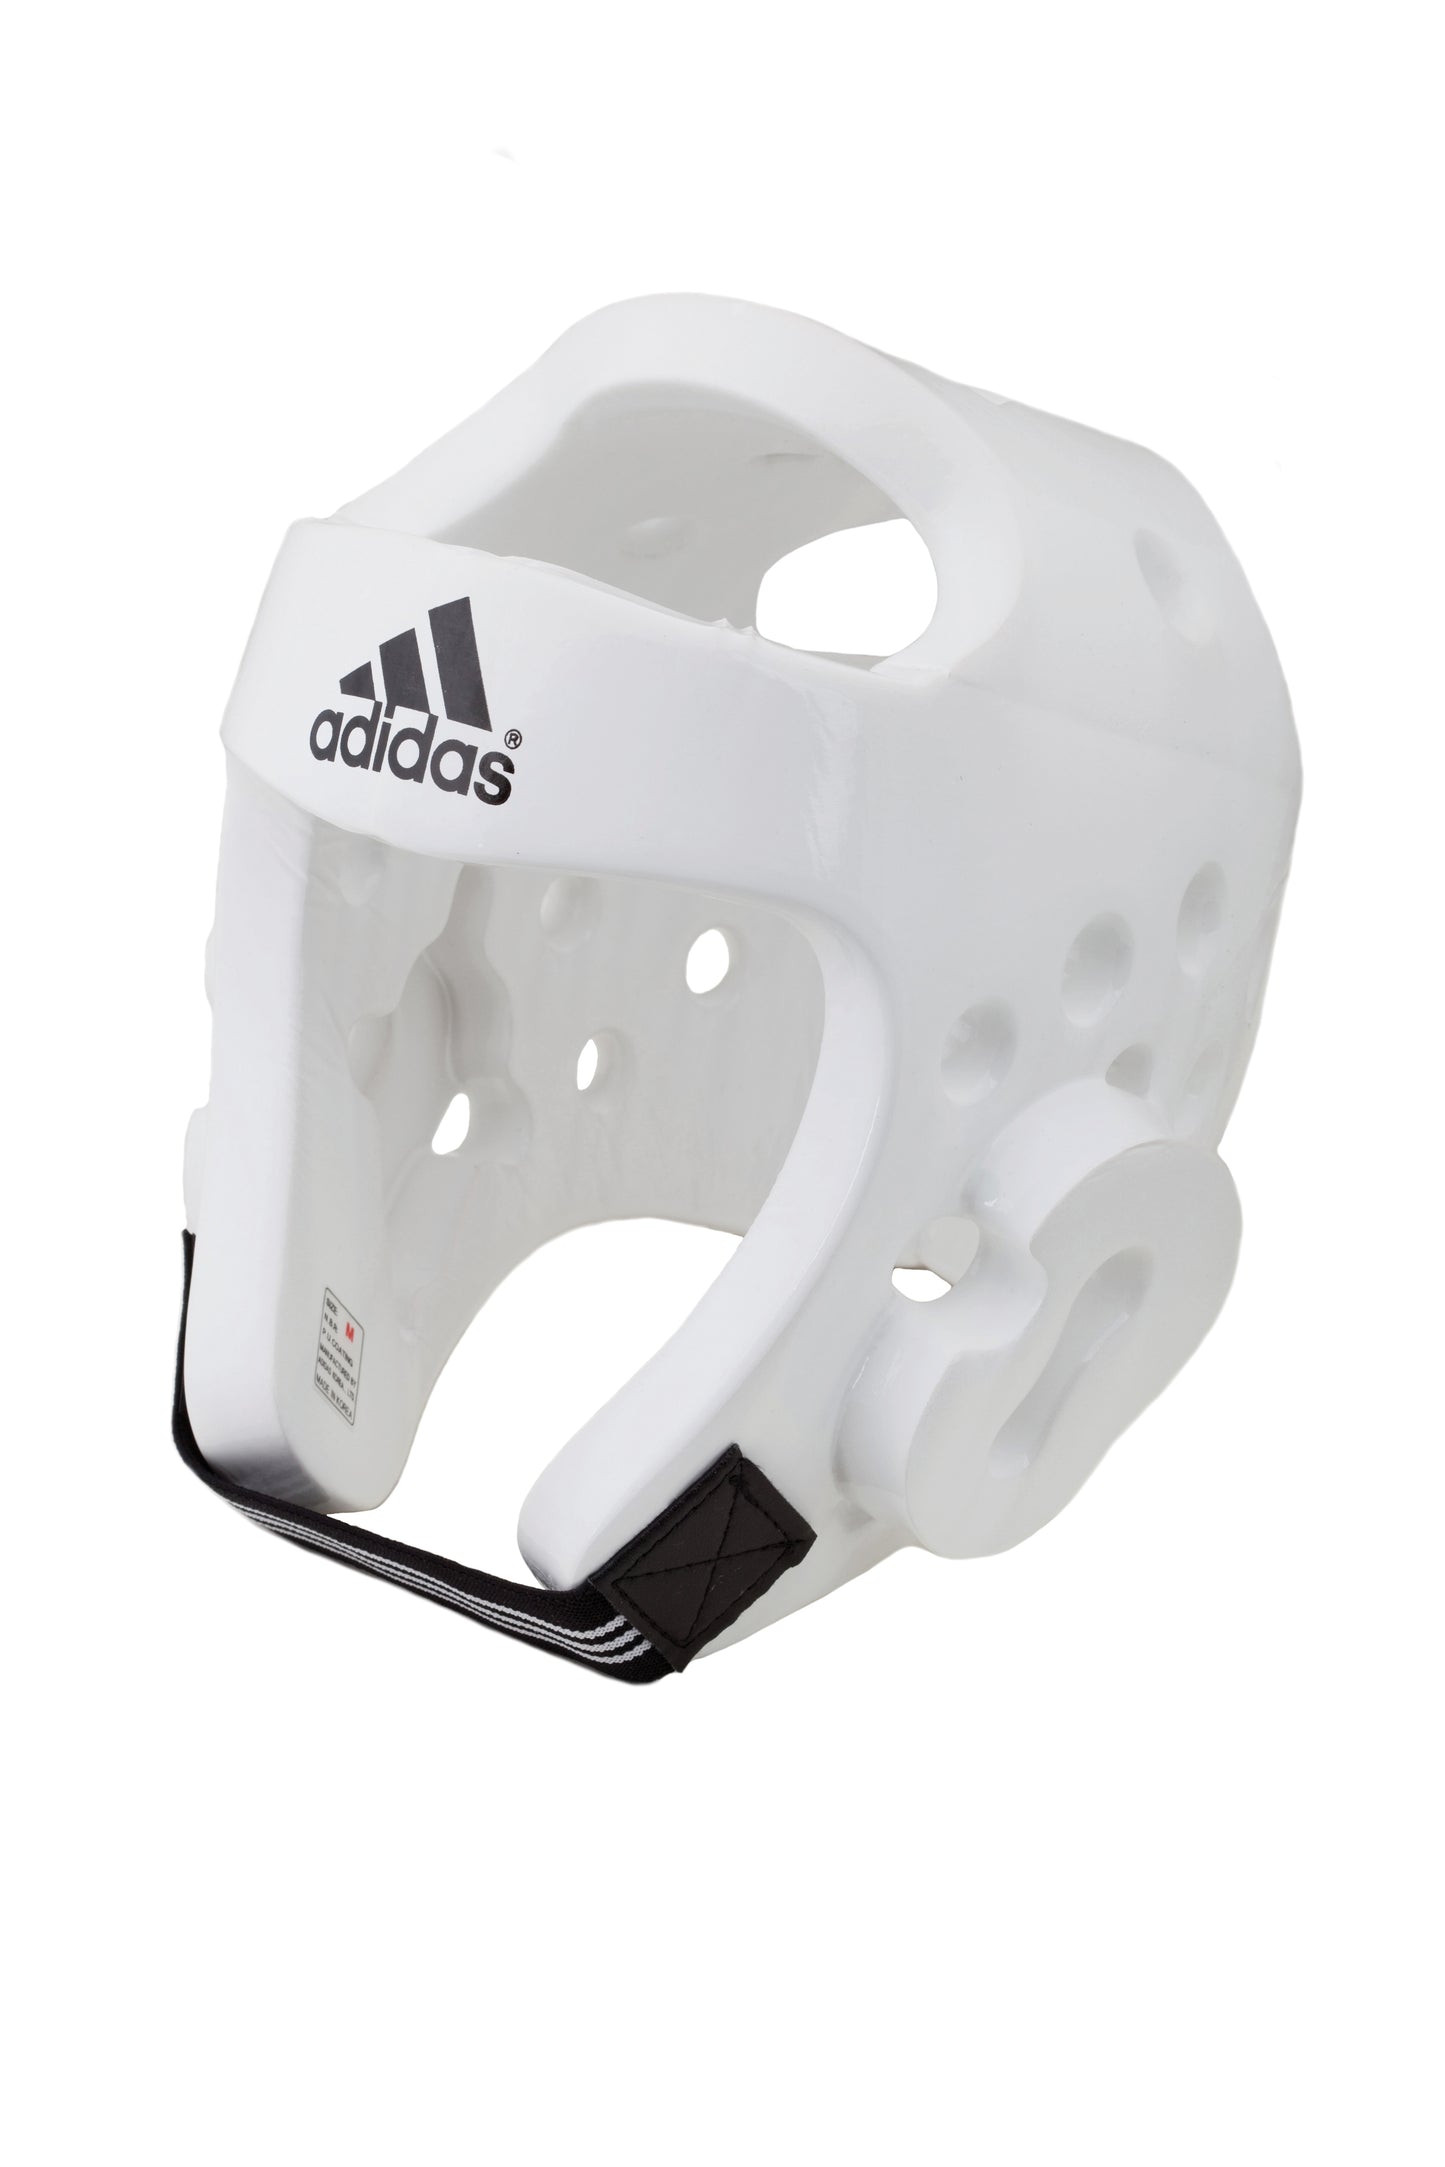 Adidas Taekwondo Helm Weiß - WTF zugelassen